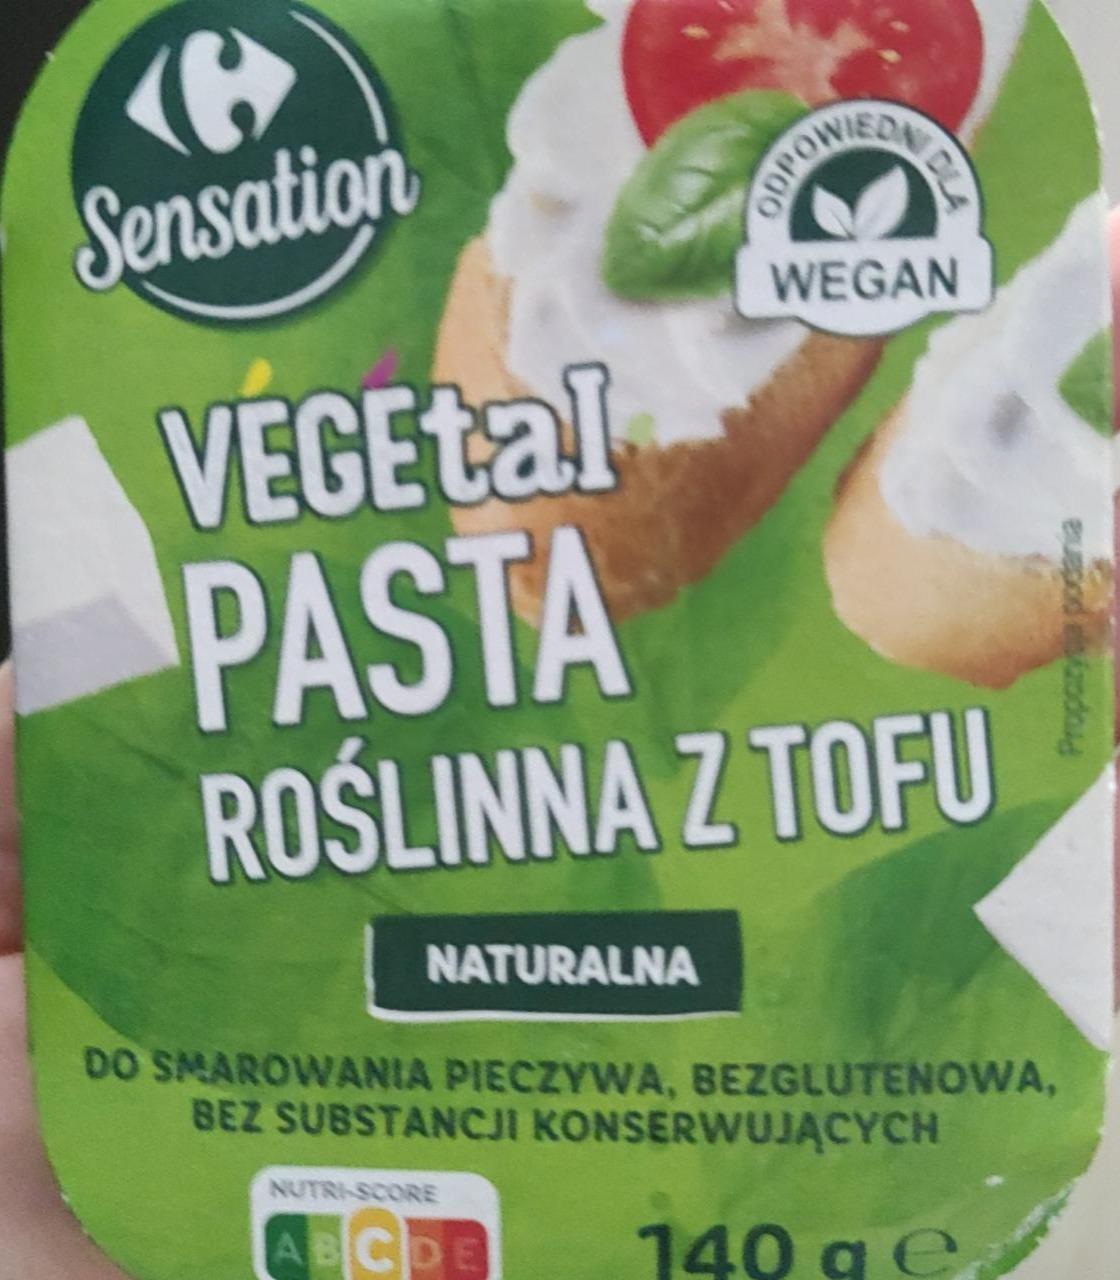 Fotografie - Vegetal Pasta roslinna z tofu Naturalna C Sensation